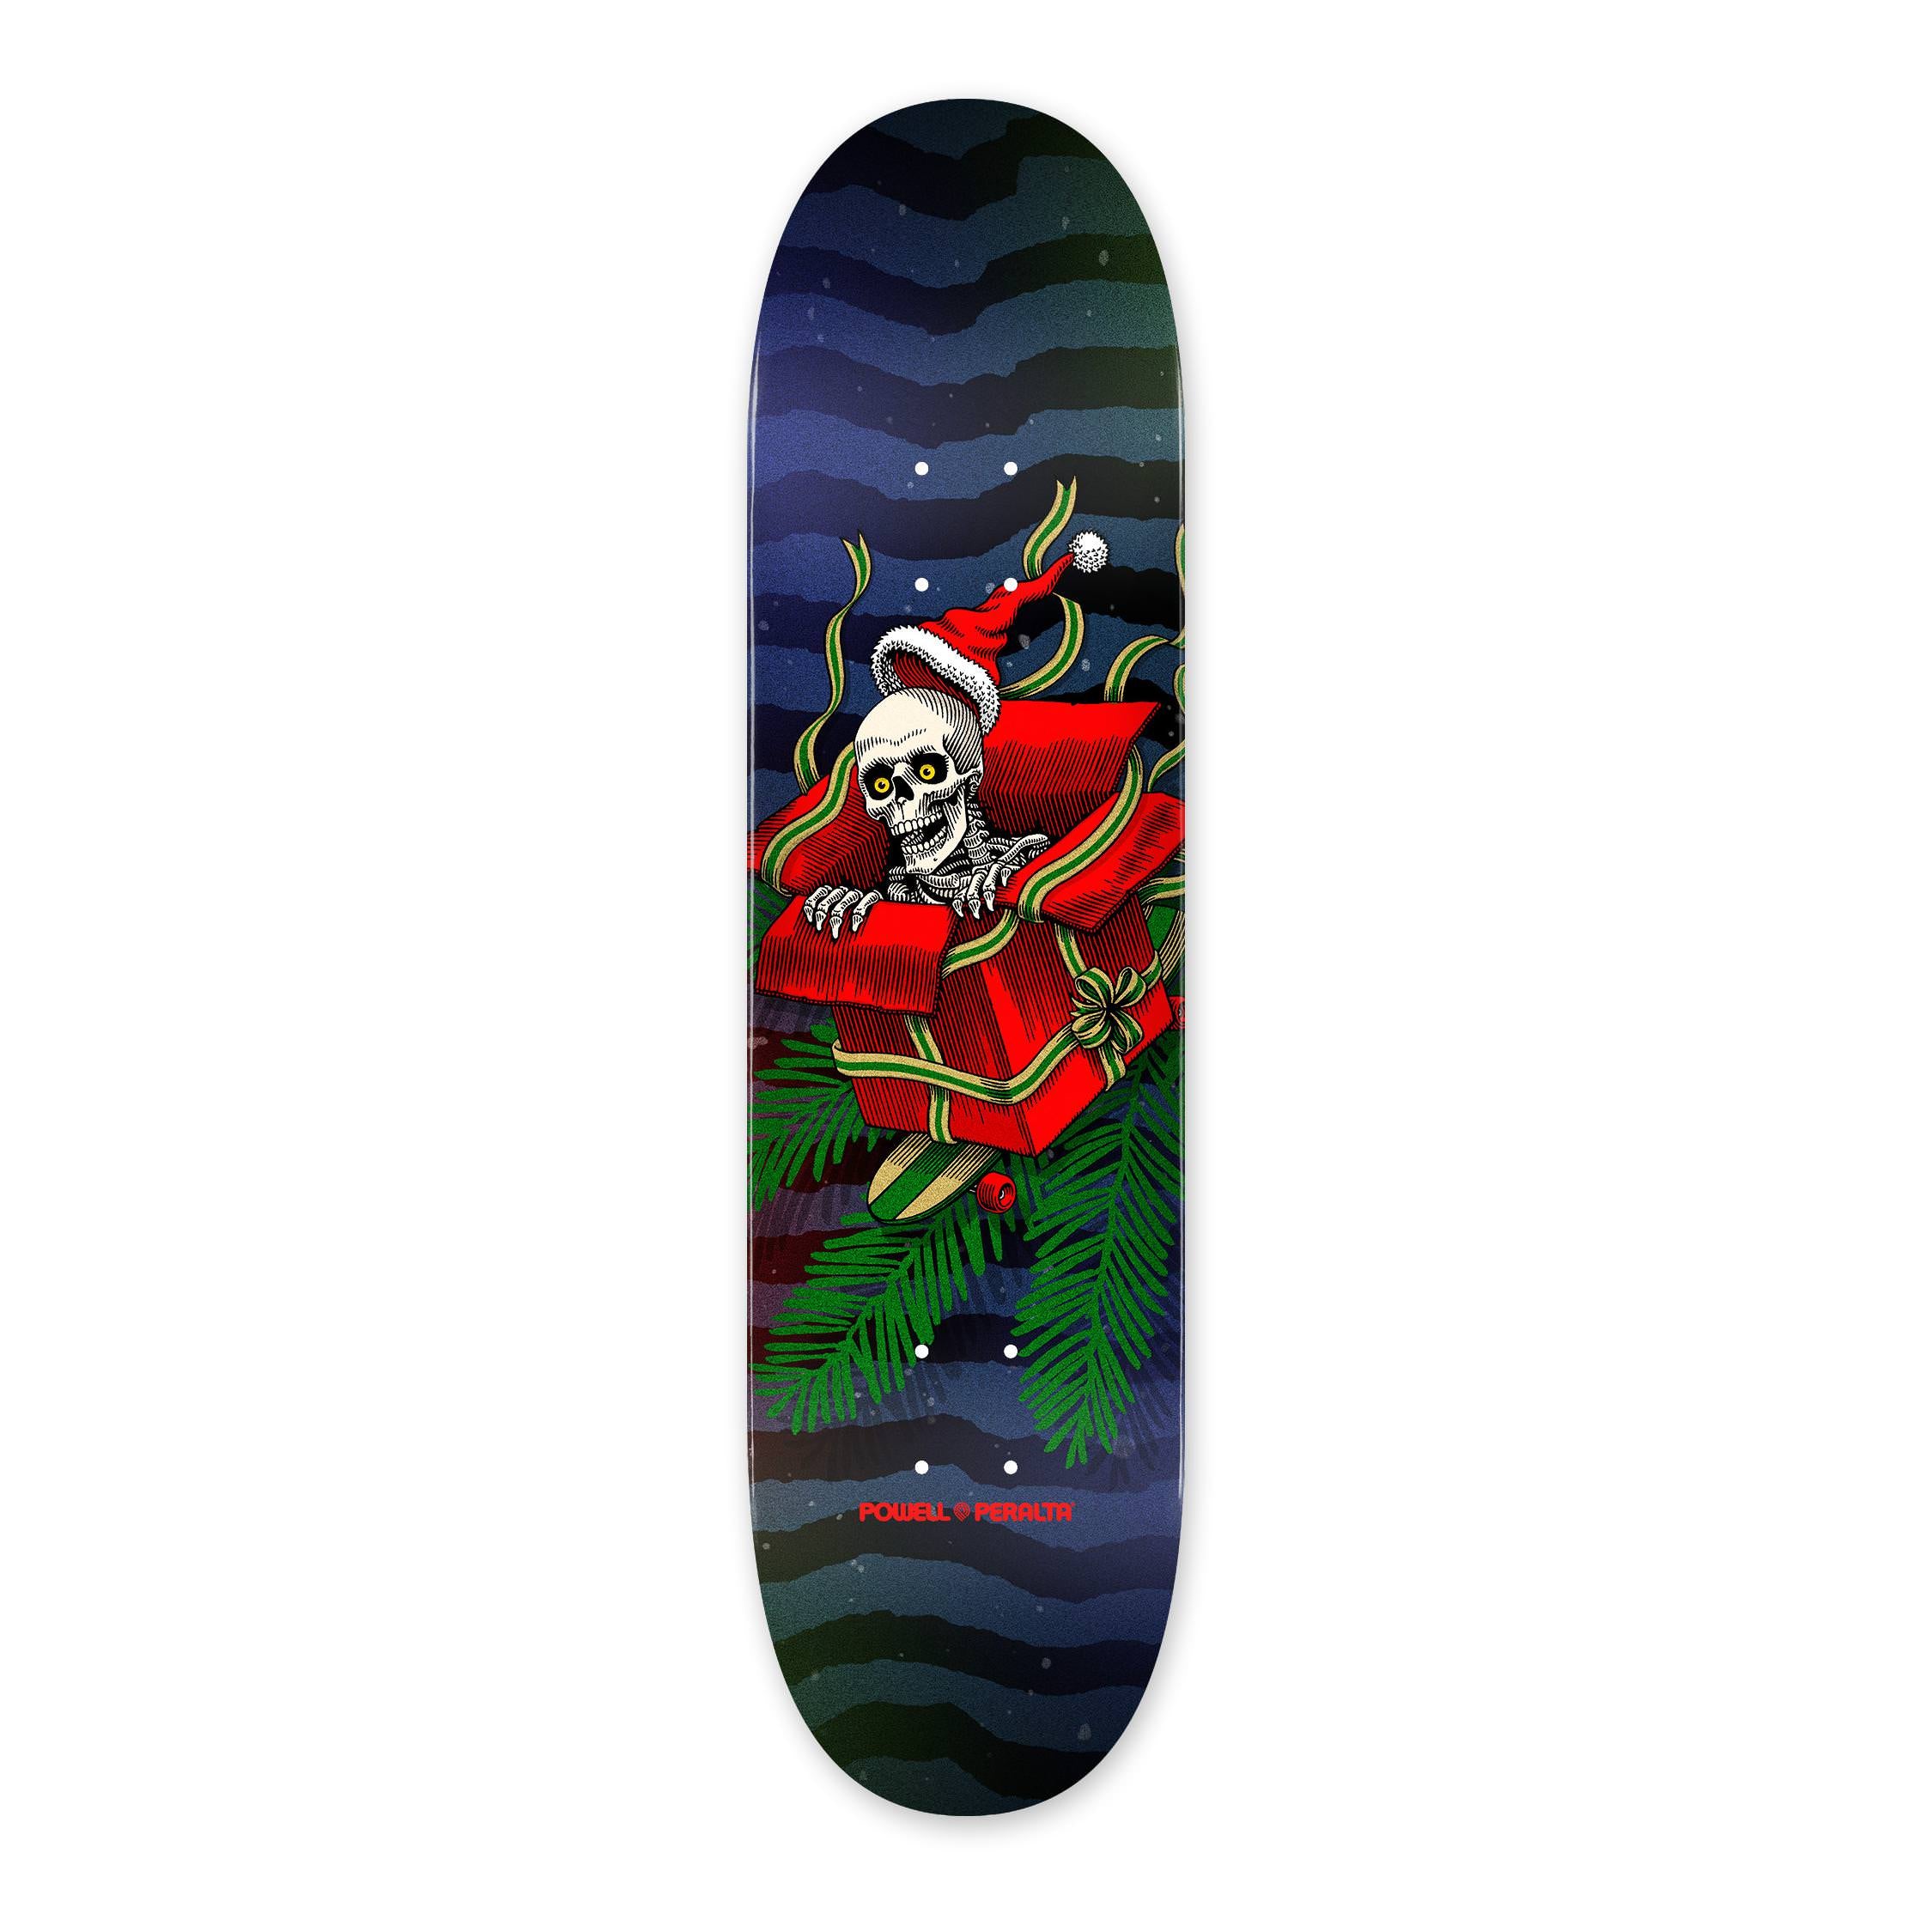 Onderbreking Matron monster Powell-Peralta Holiday 2022 Limited Edition Skateboard Deck "Box Drop"